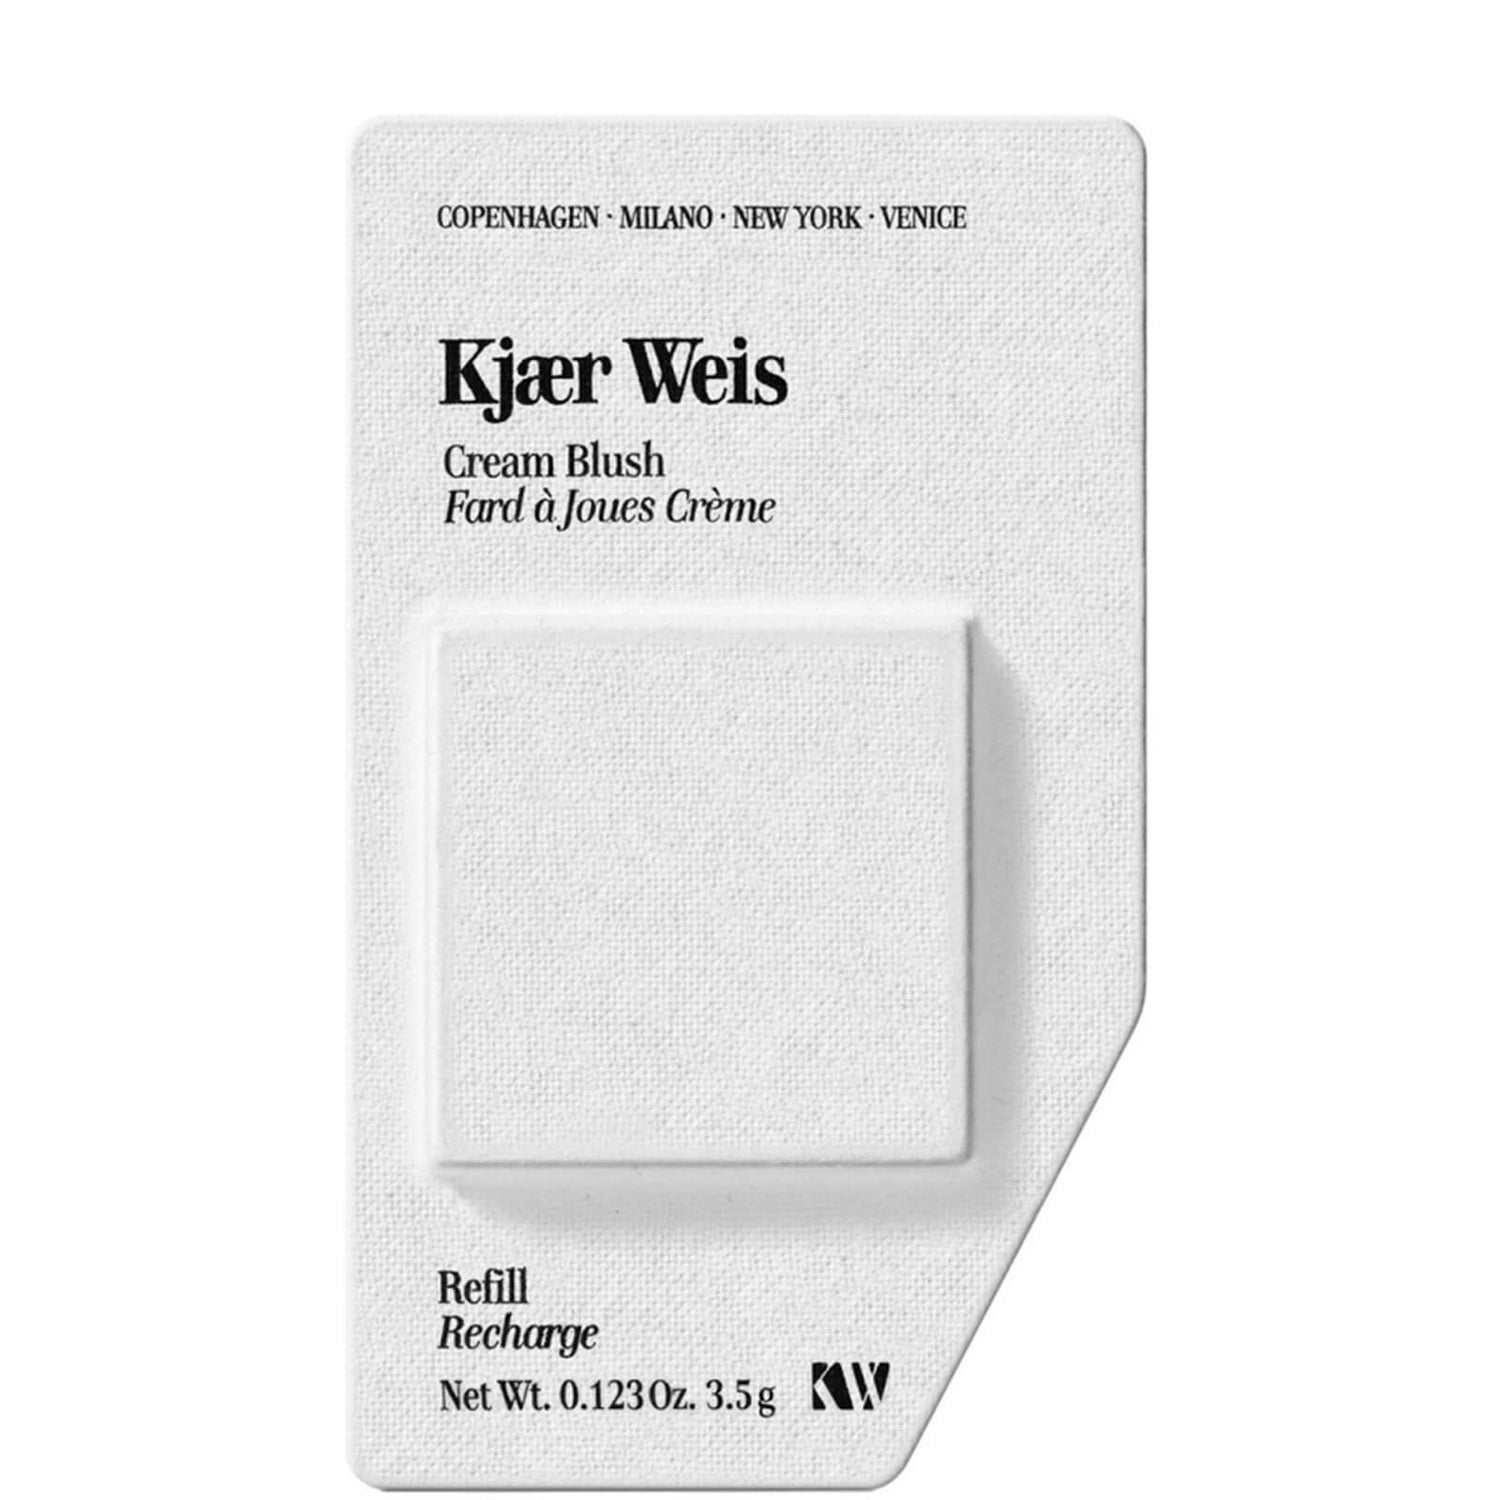 Kjaer Weis Cream Blush Refill (0.45 oz.)